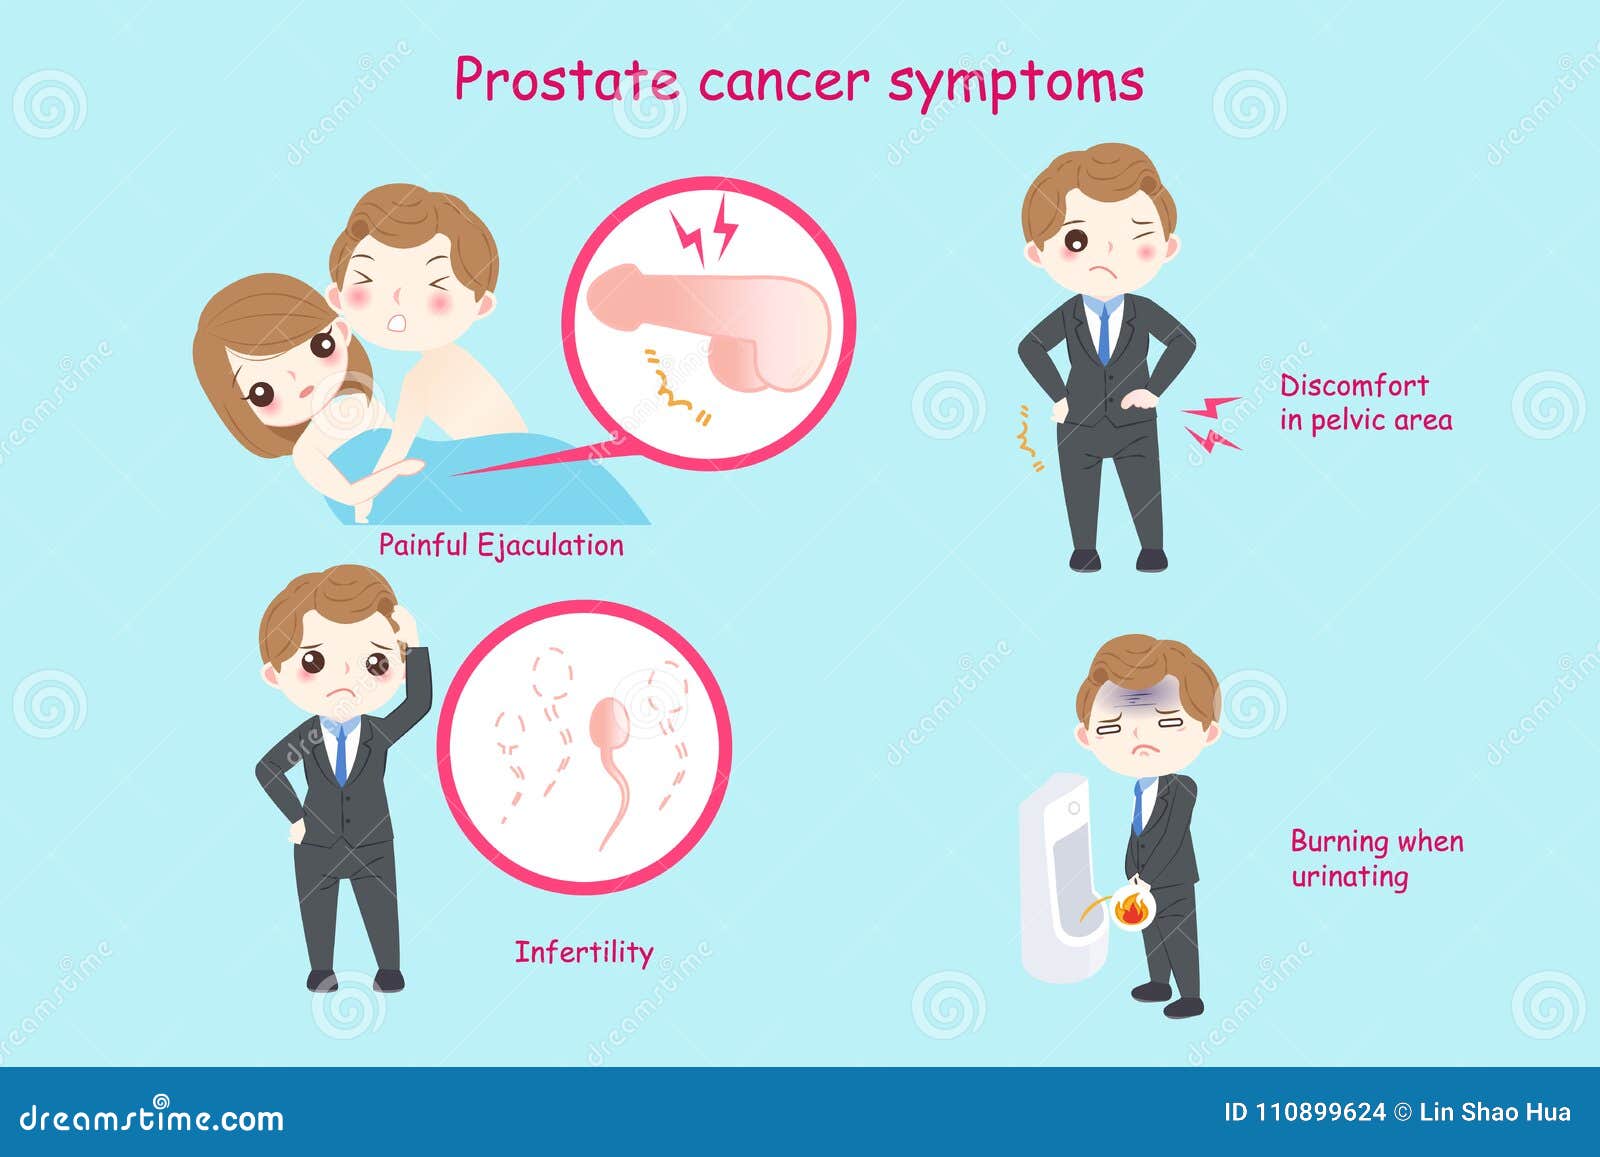 sintoma de cancer prostata semne ale prostatitei detalii tratament